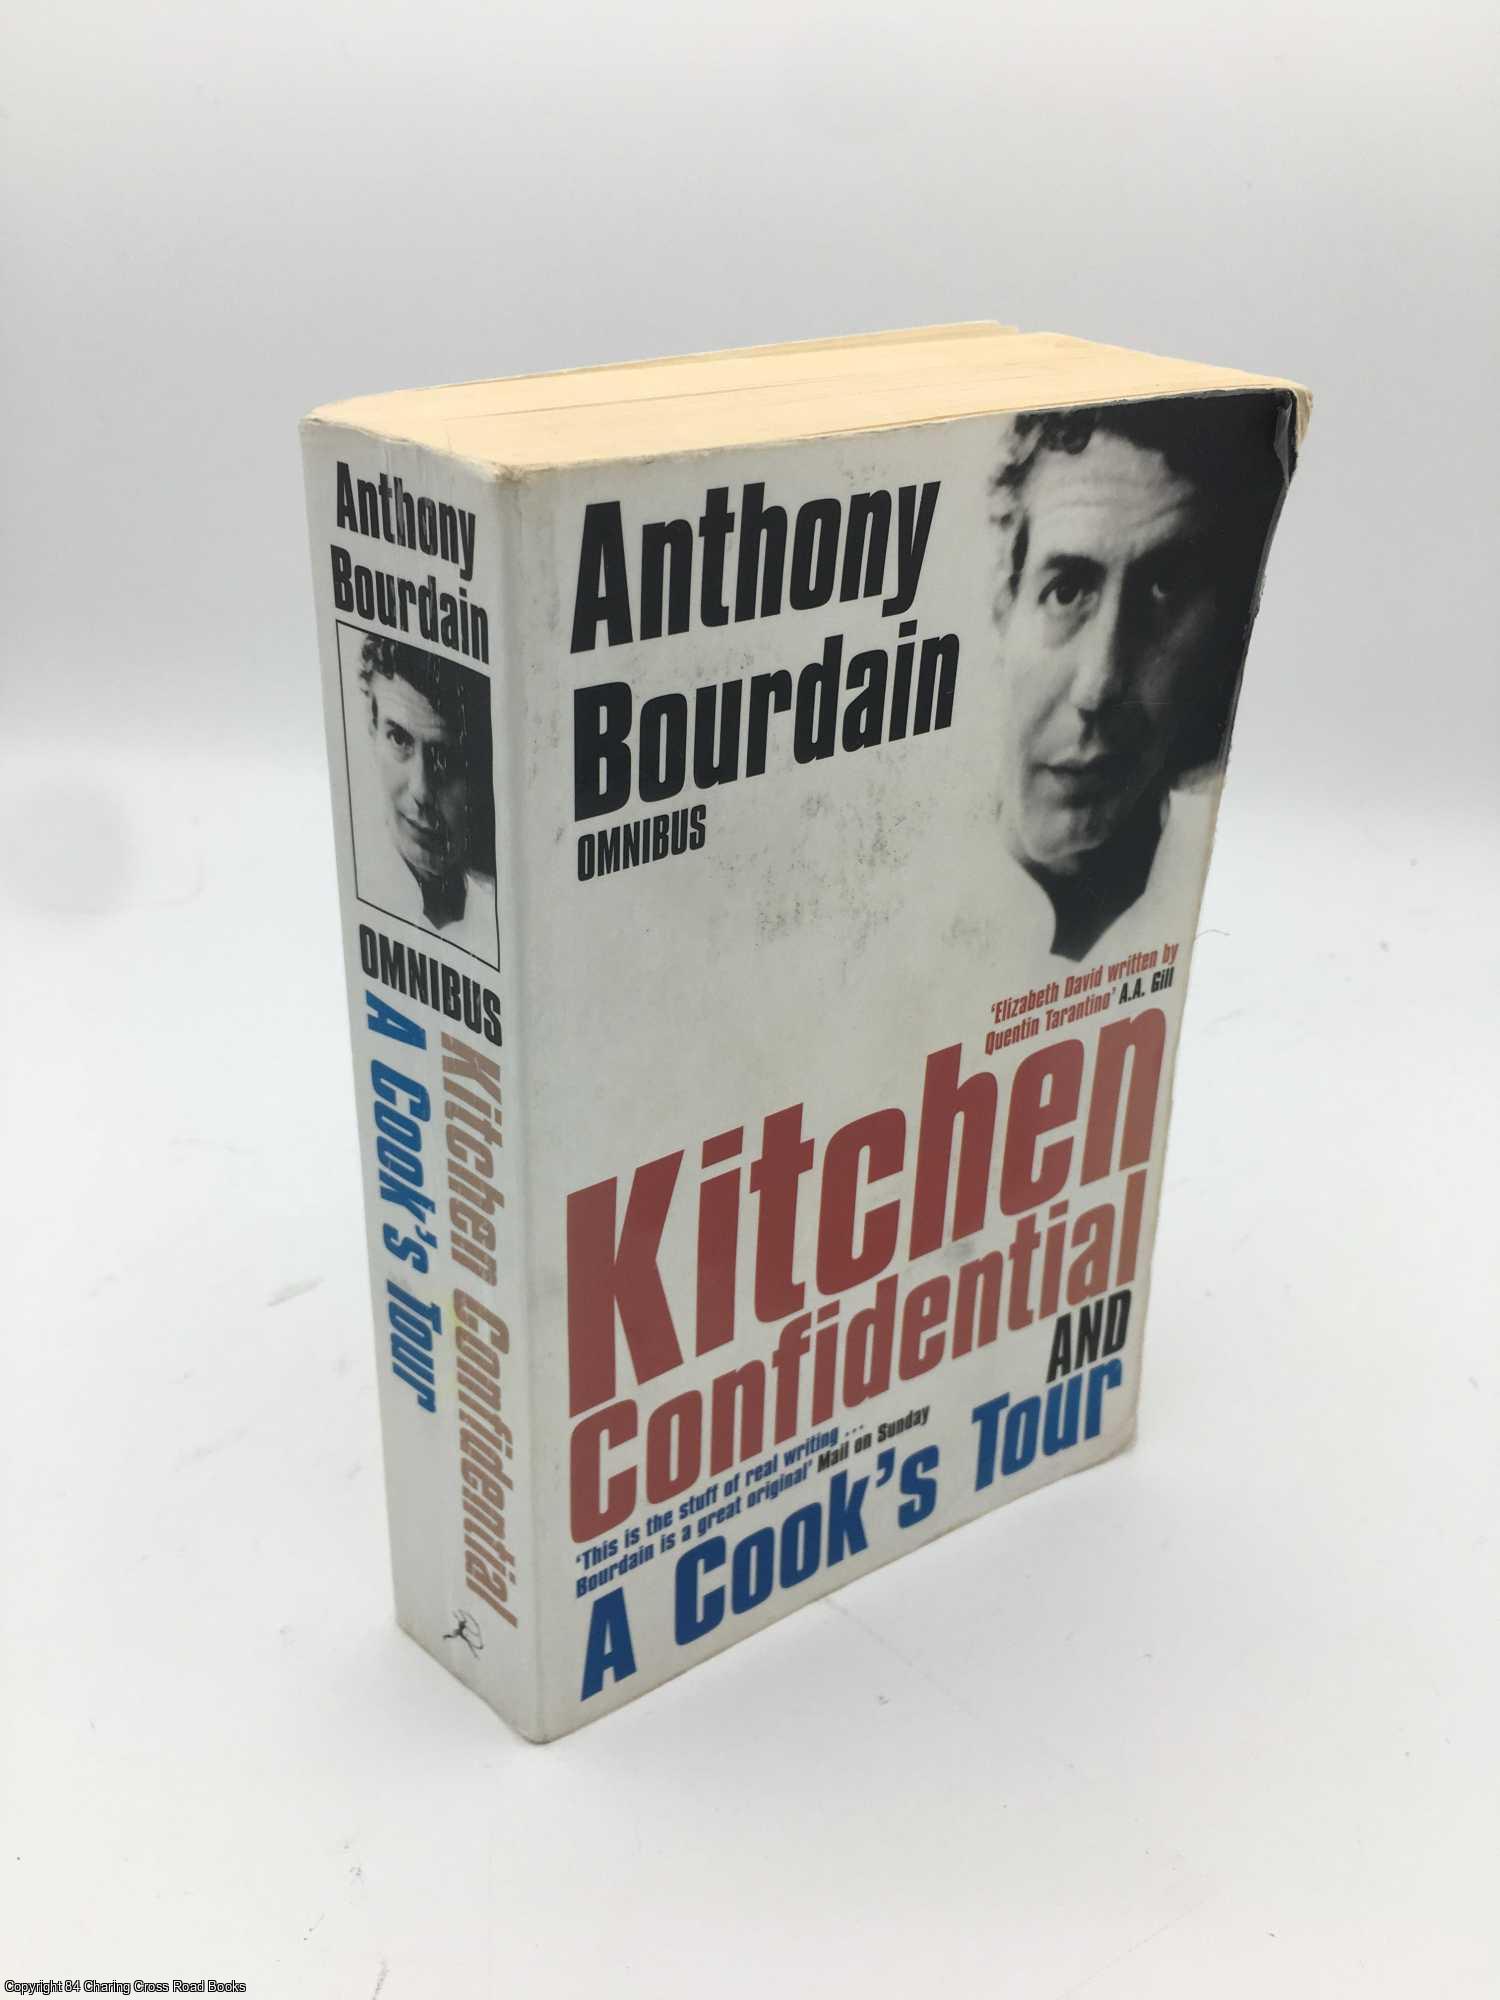 Bourdain, Anthony - Anthony Bourdain Omnibus: Kitchen Confidential, A Cook's Tour